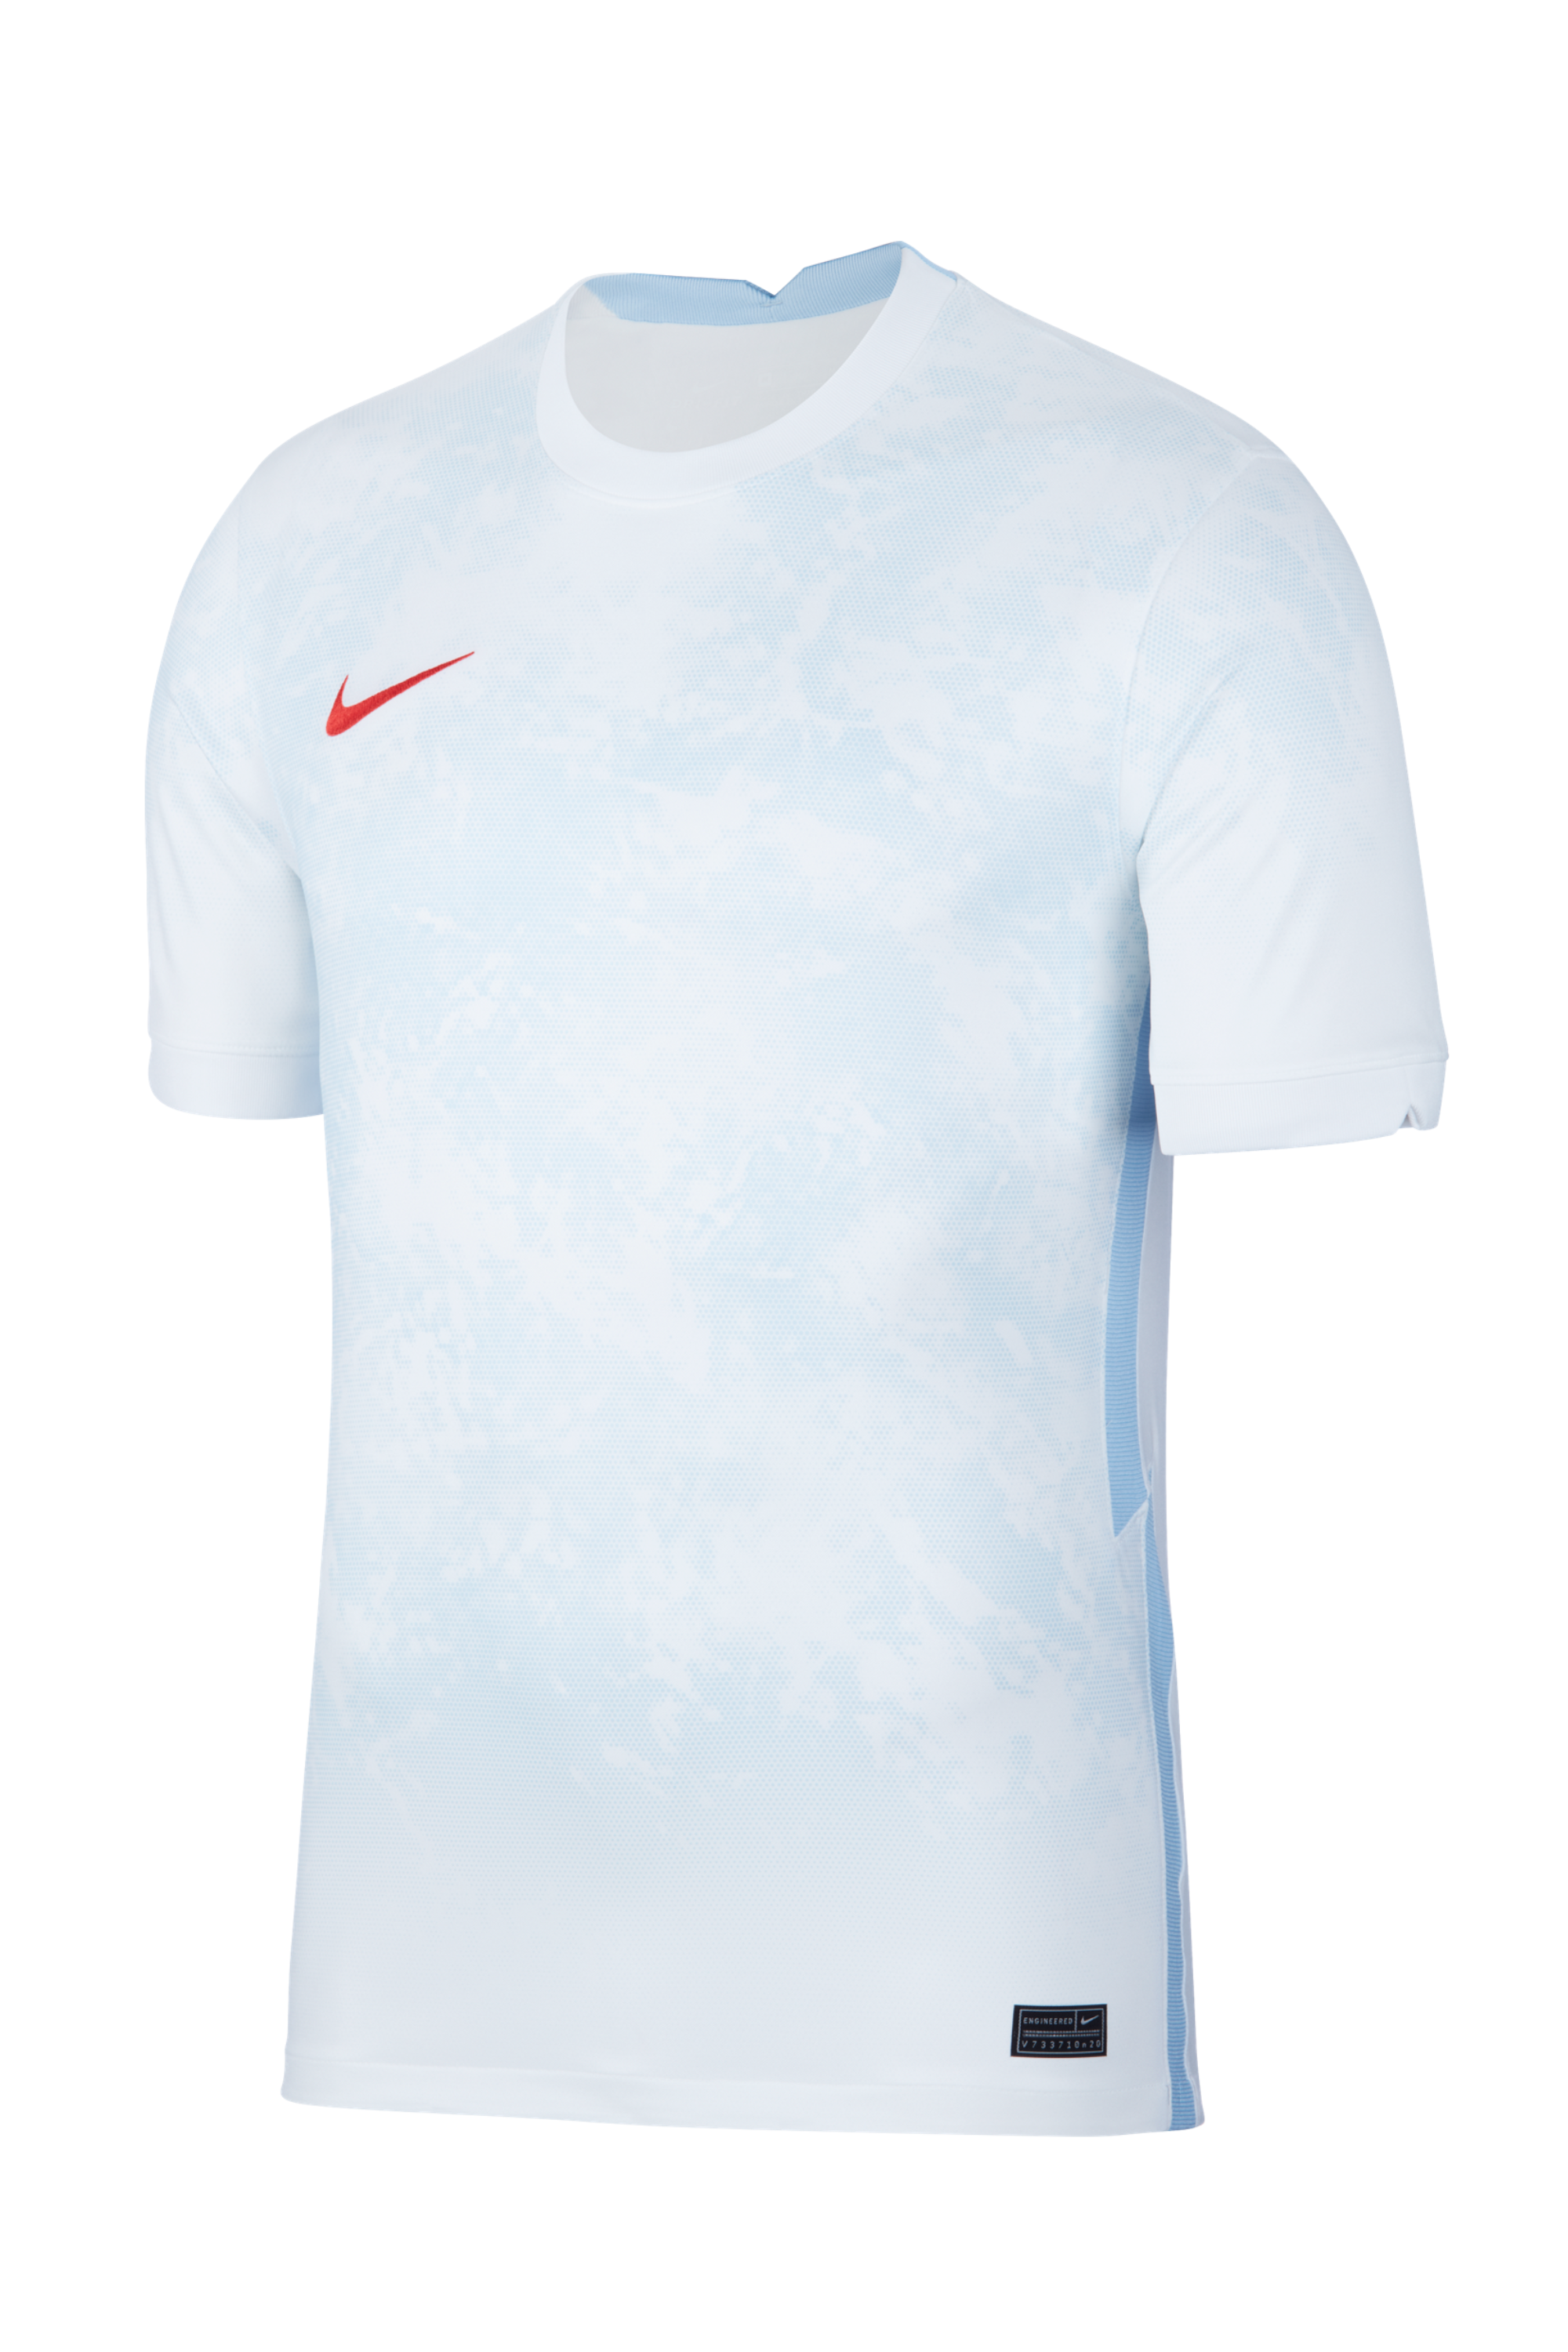 Football Shirt Nike FCSB 20/21 Away Breathe Stadium | R-GOL.com - Football boots equipment